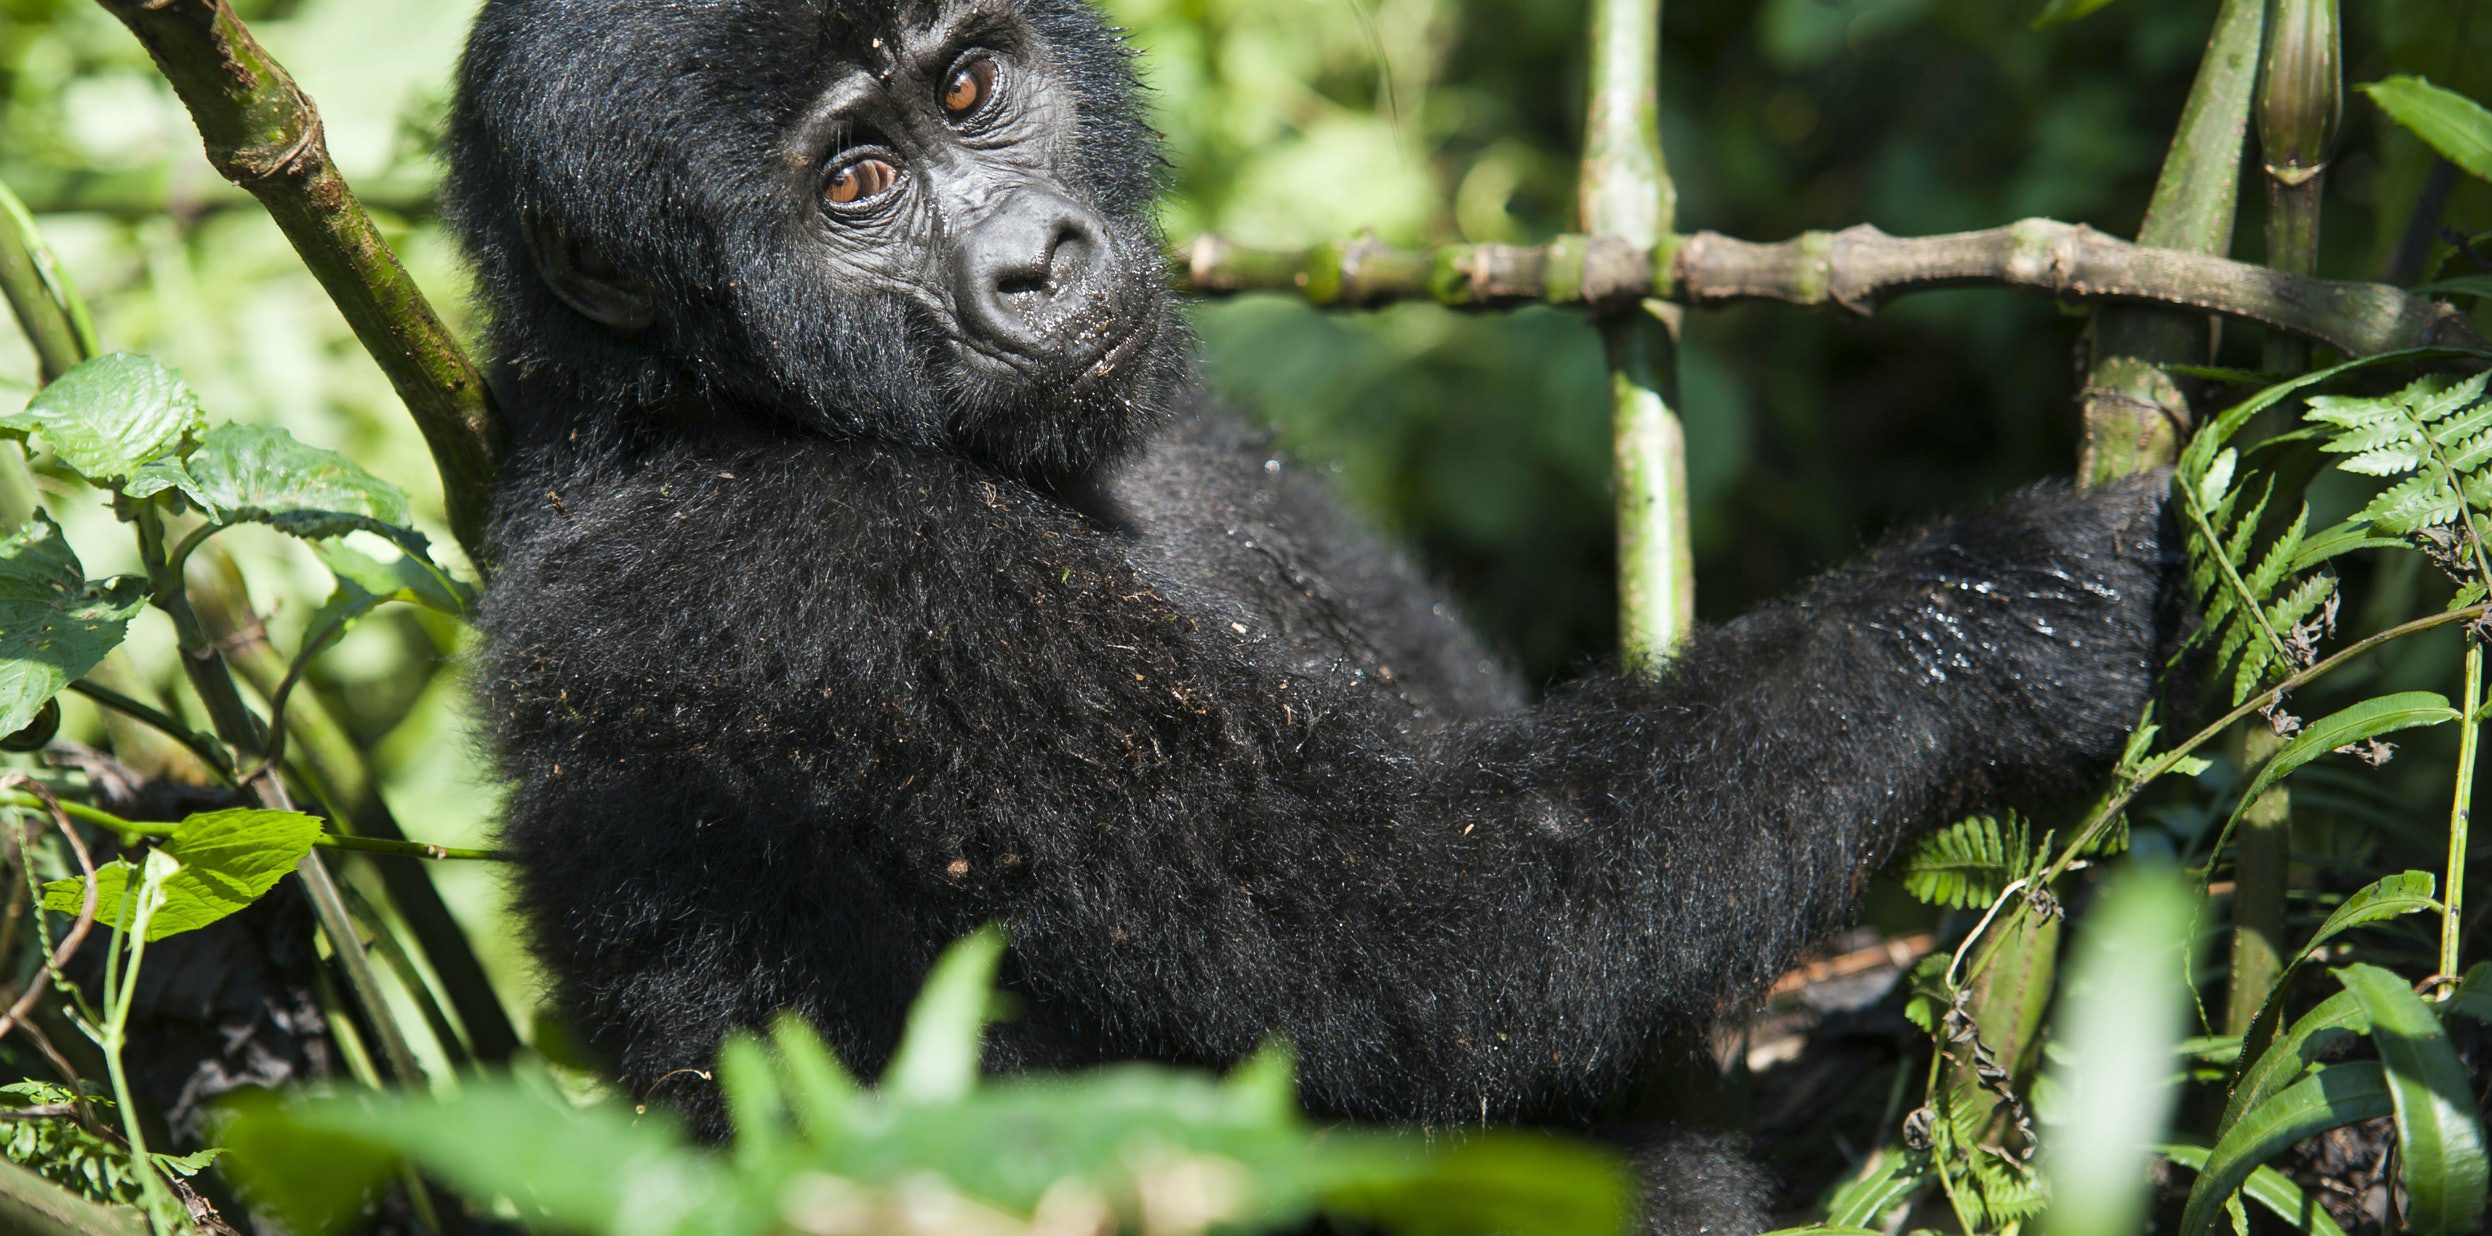 Gorilla Habituation Experience in Uganda